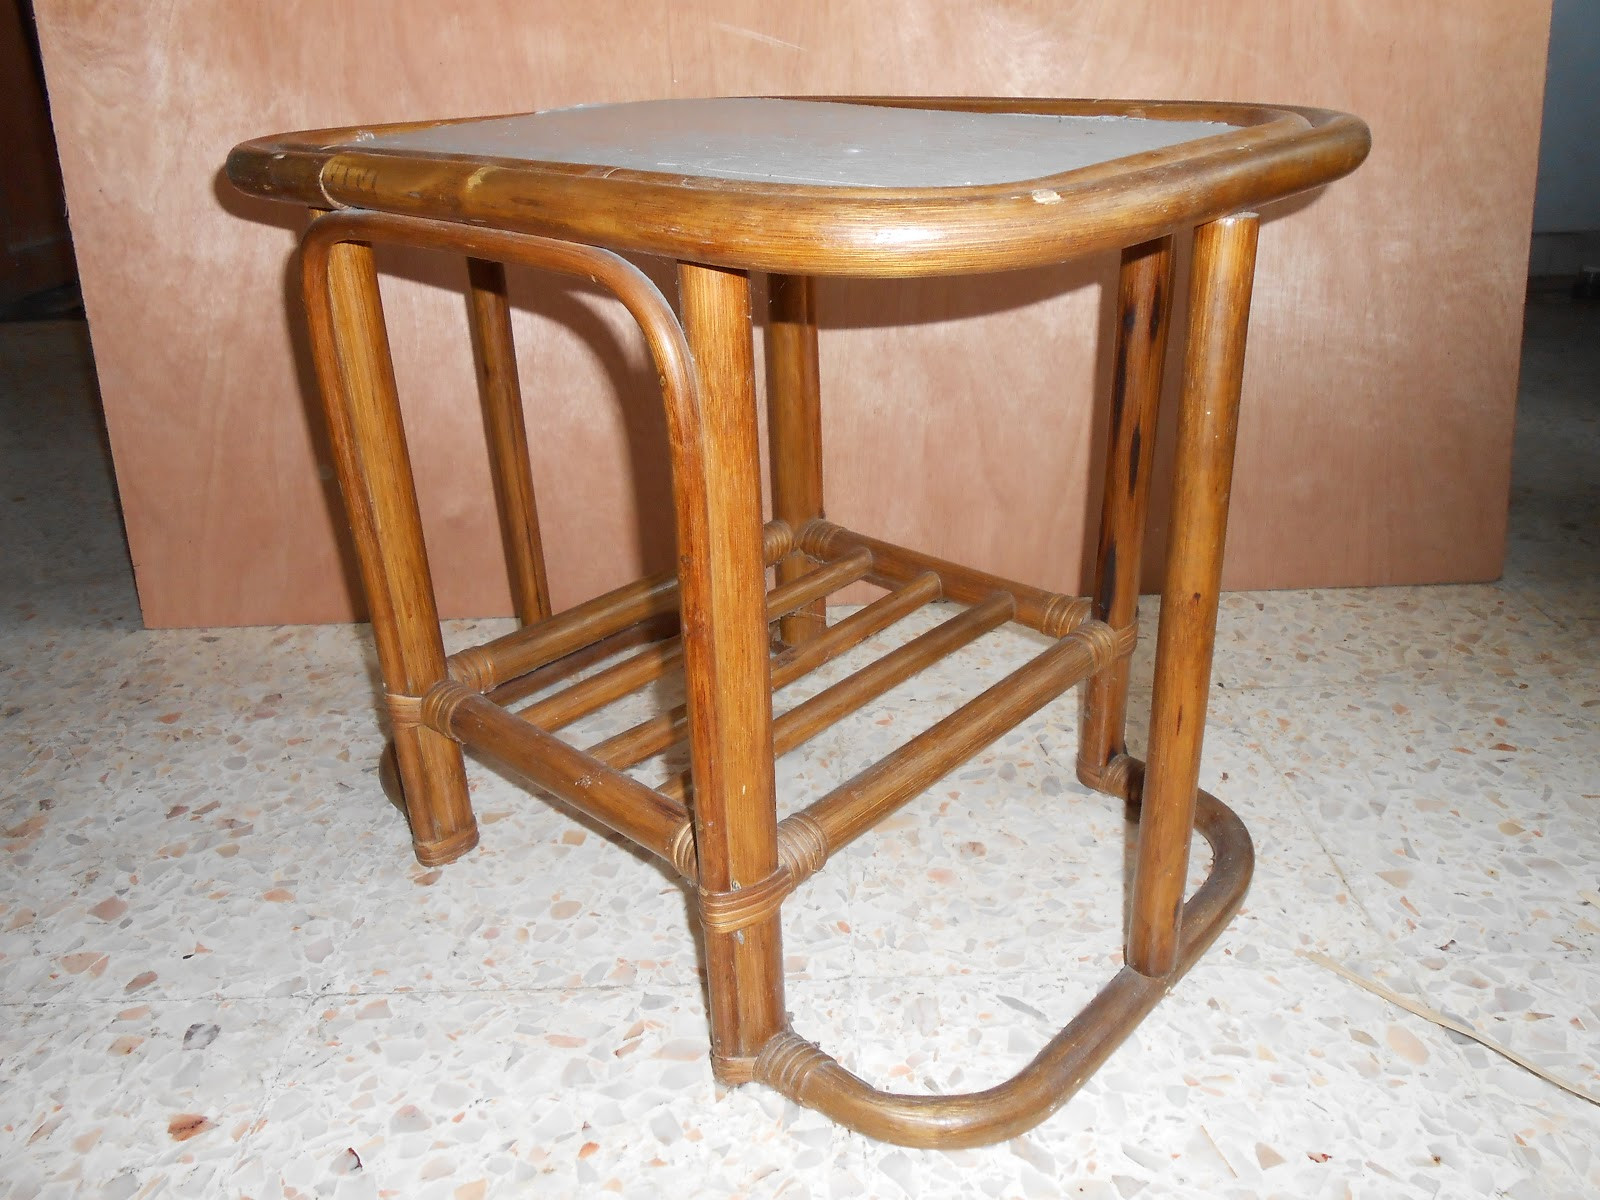 Best ideas about DIY Bamboo Furniture
. Save or Pin refurnish DIY rattan bamboo furniture April 2013 Now.